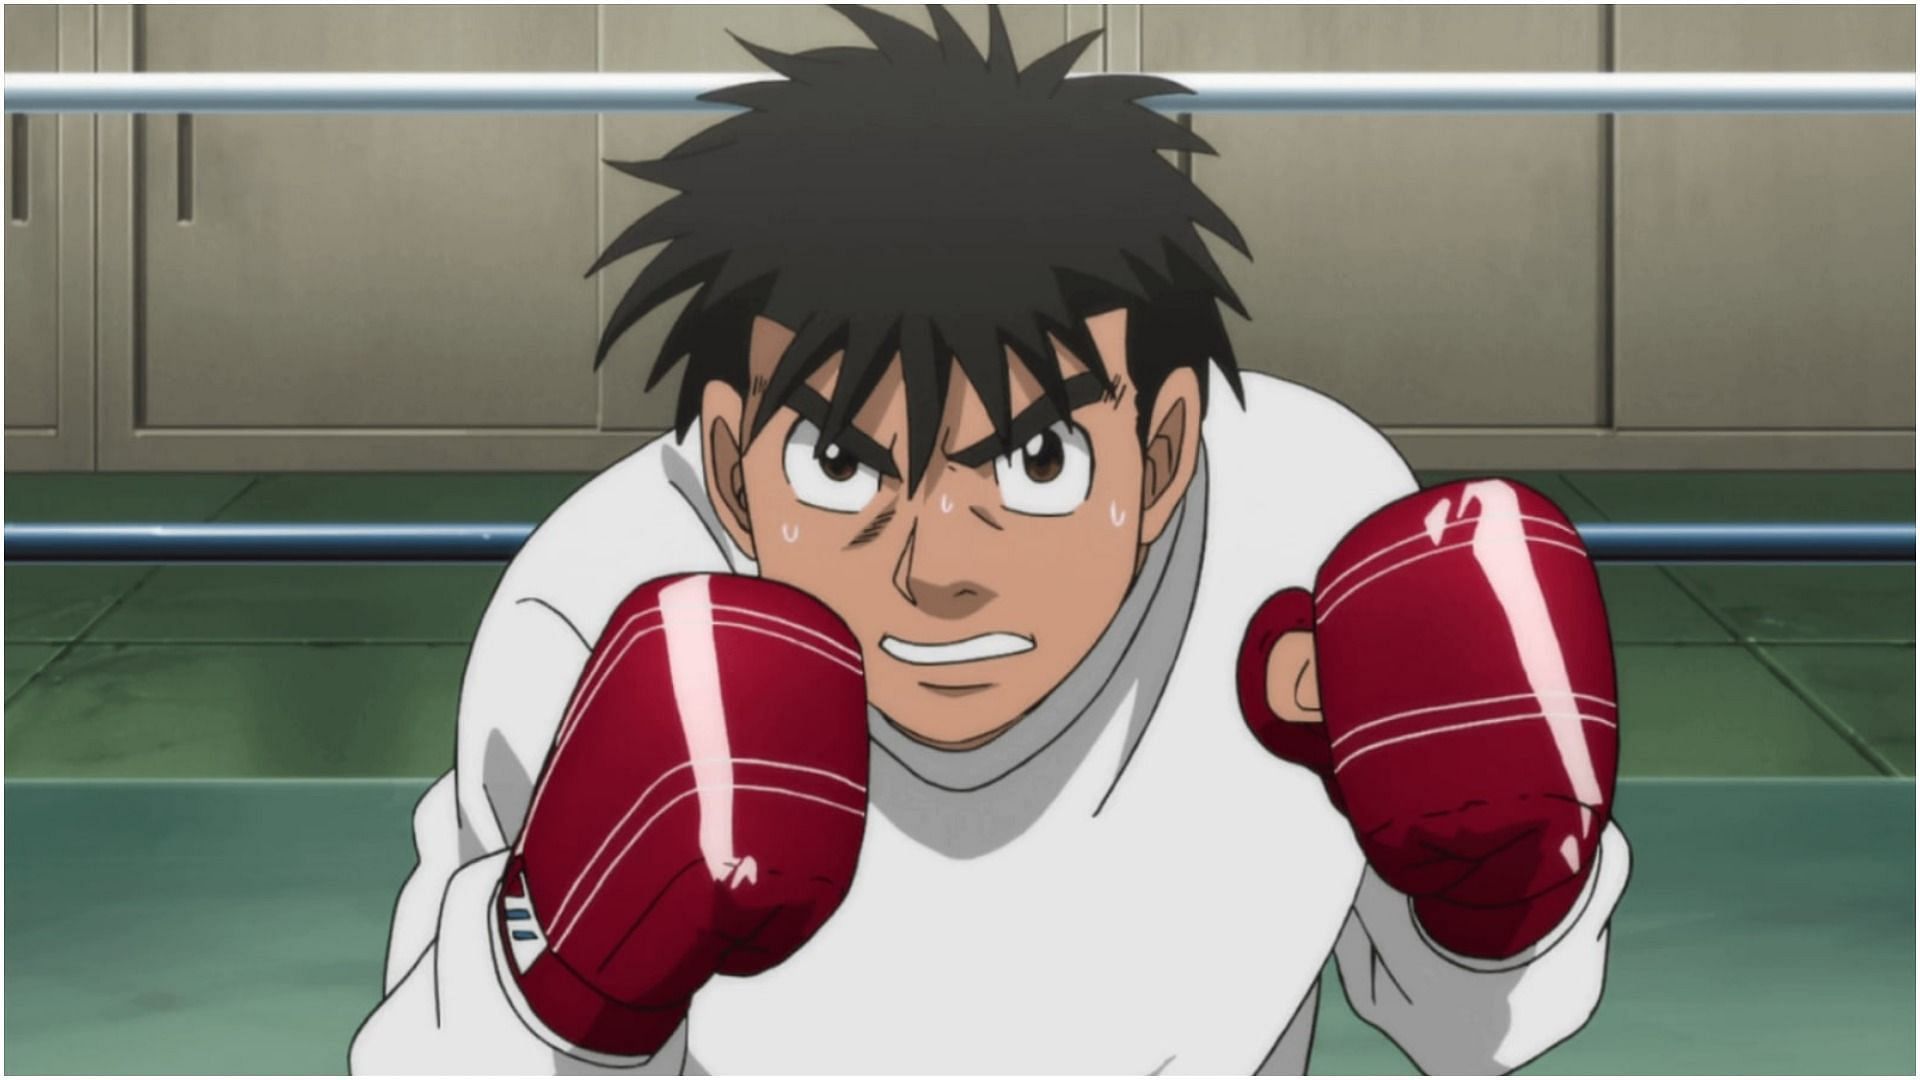 Ippo Makunouchi as seen in the anime Ippo Makunouchi (Image via Madhouse)